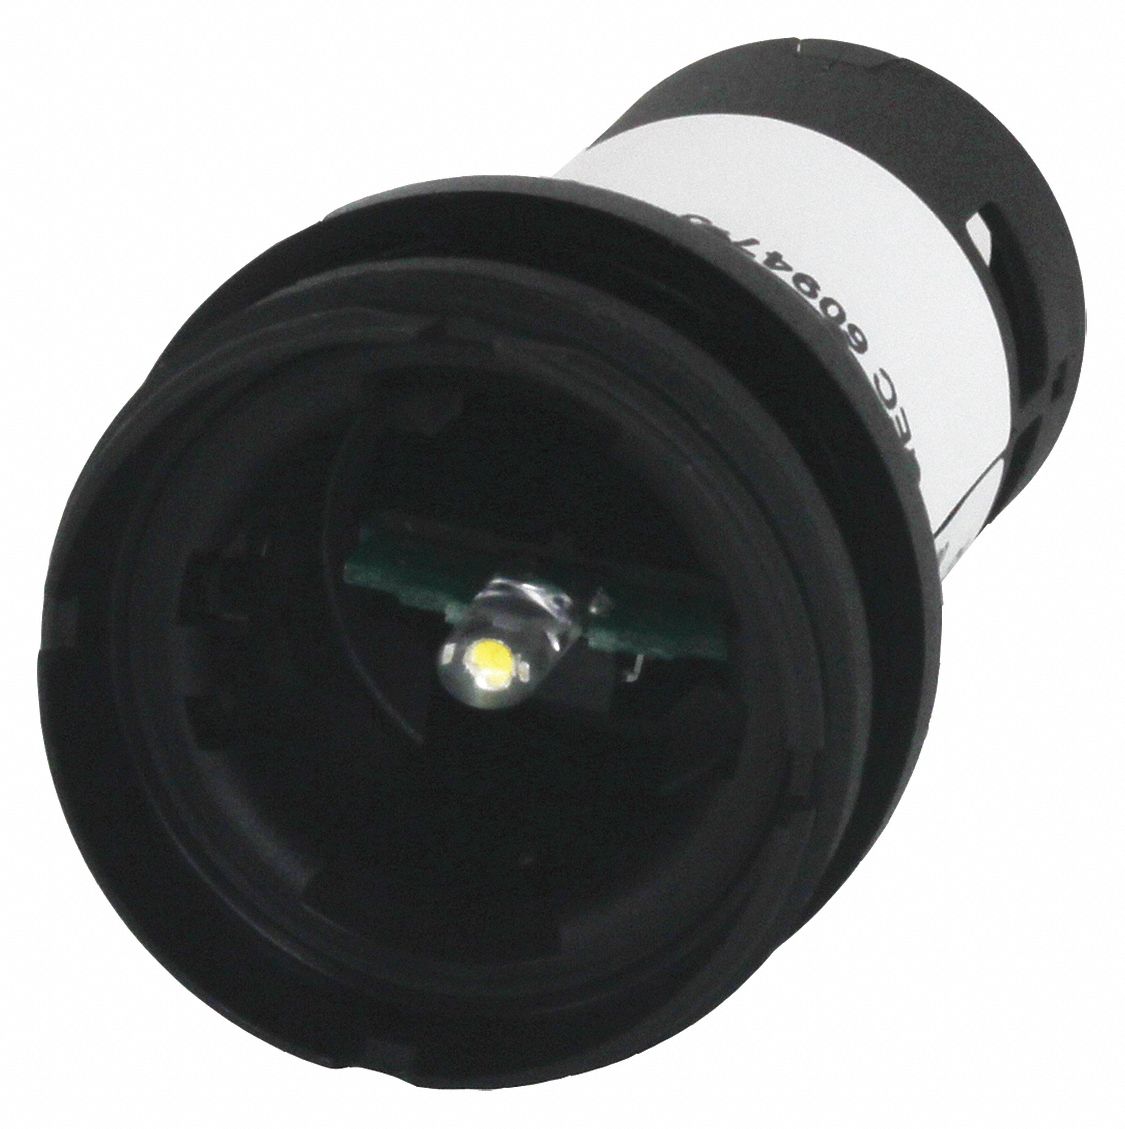 Raised Indicator Light, 22mm, 120VAC Voltage, Lamp Type: LED, Terminal Connection: Screw